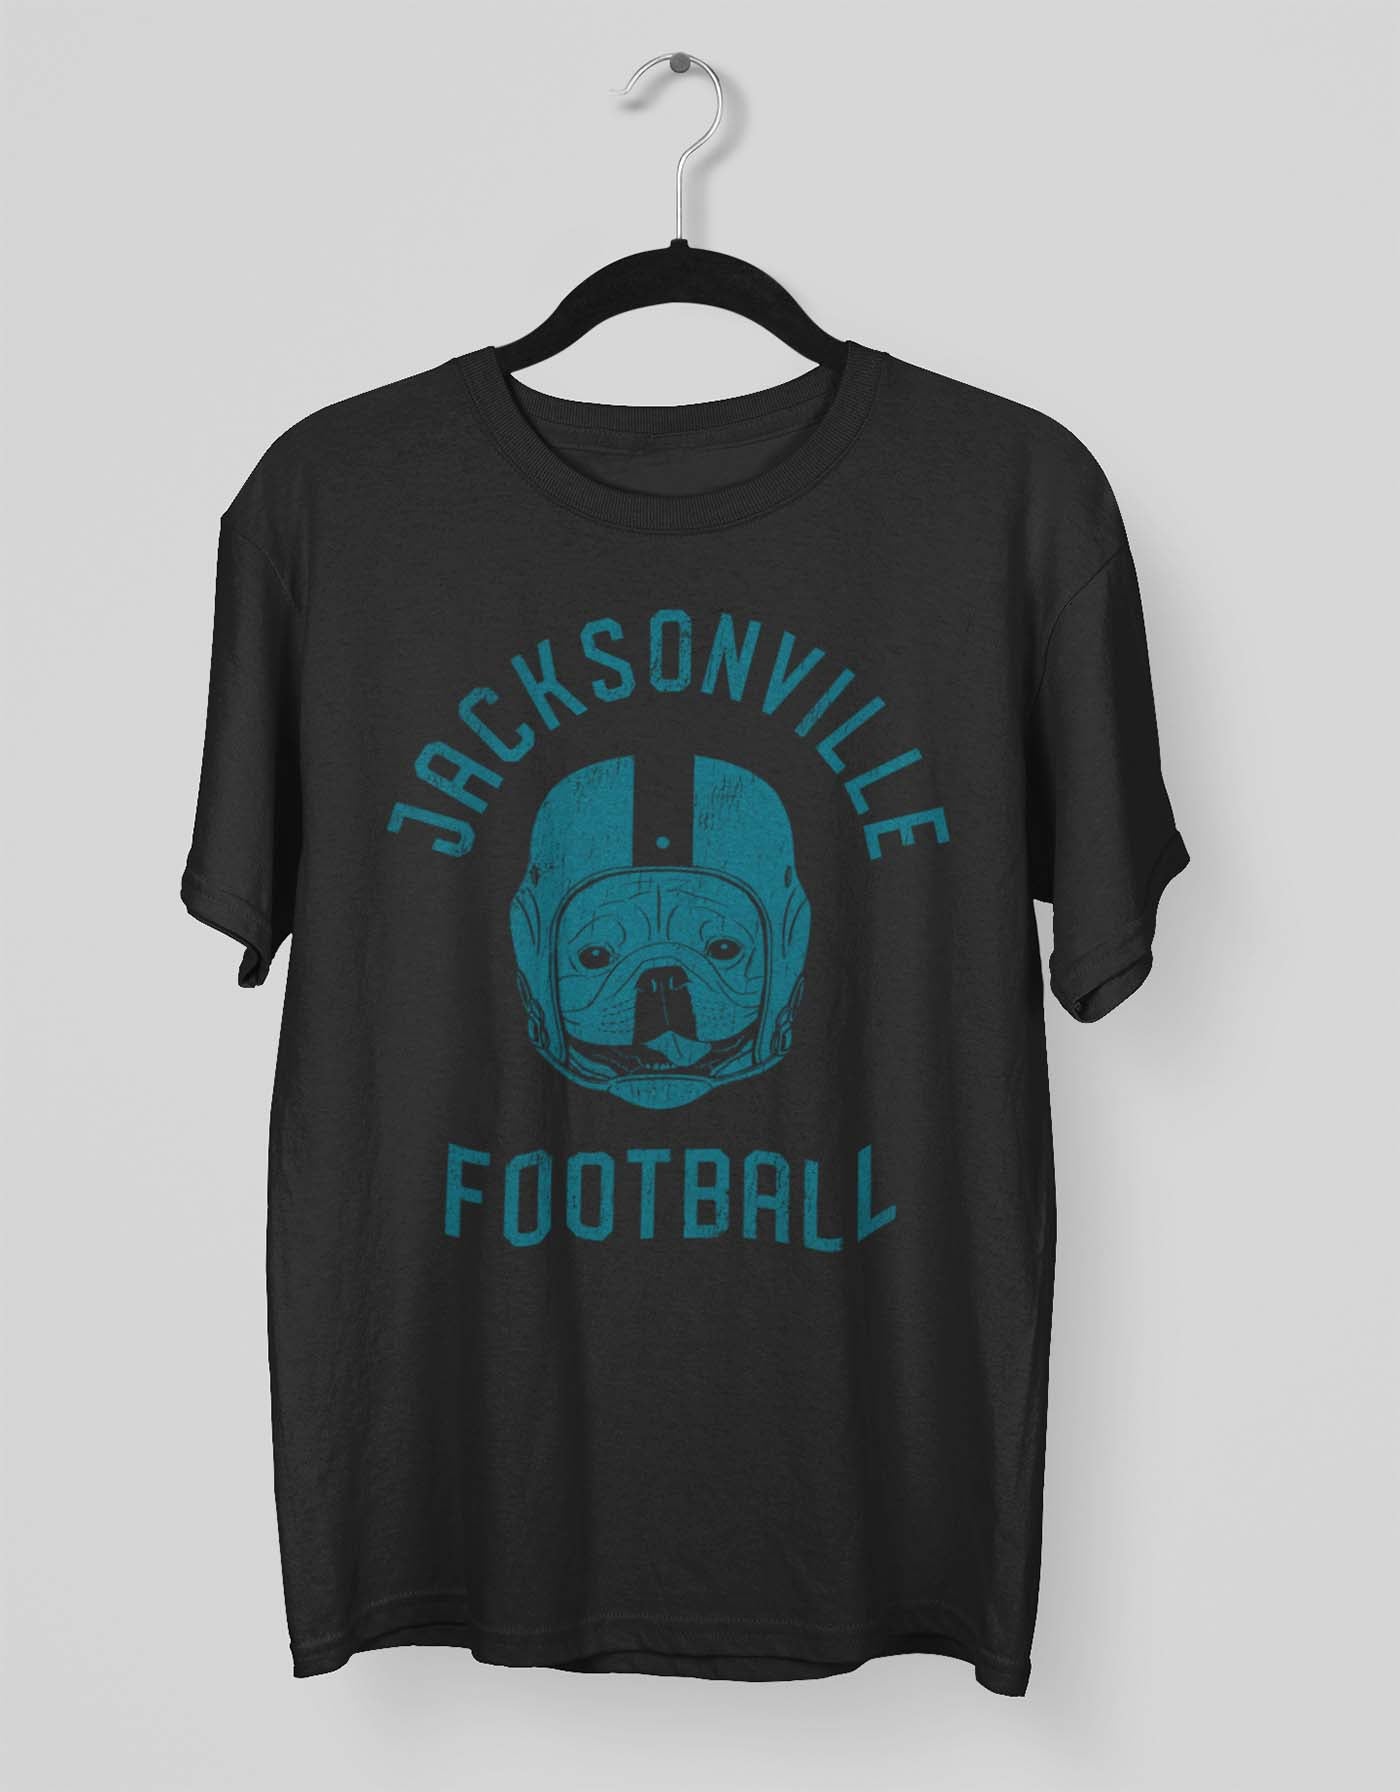 Jacksonville Football French Bulldog T-Shirt